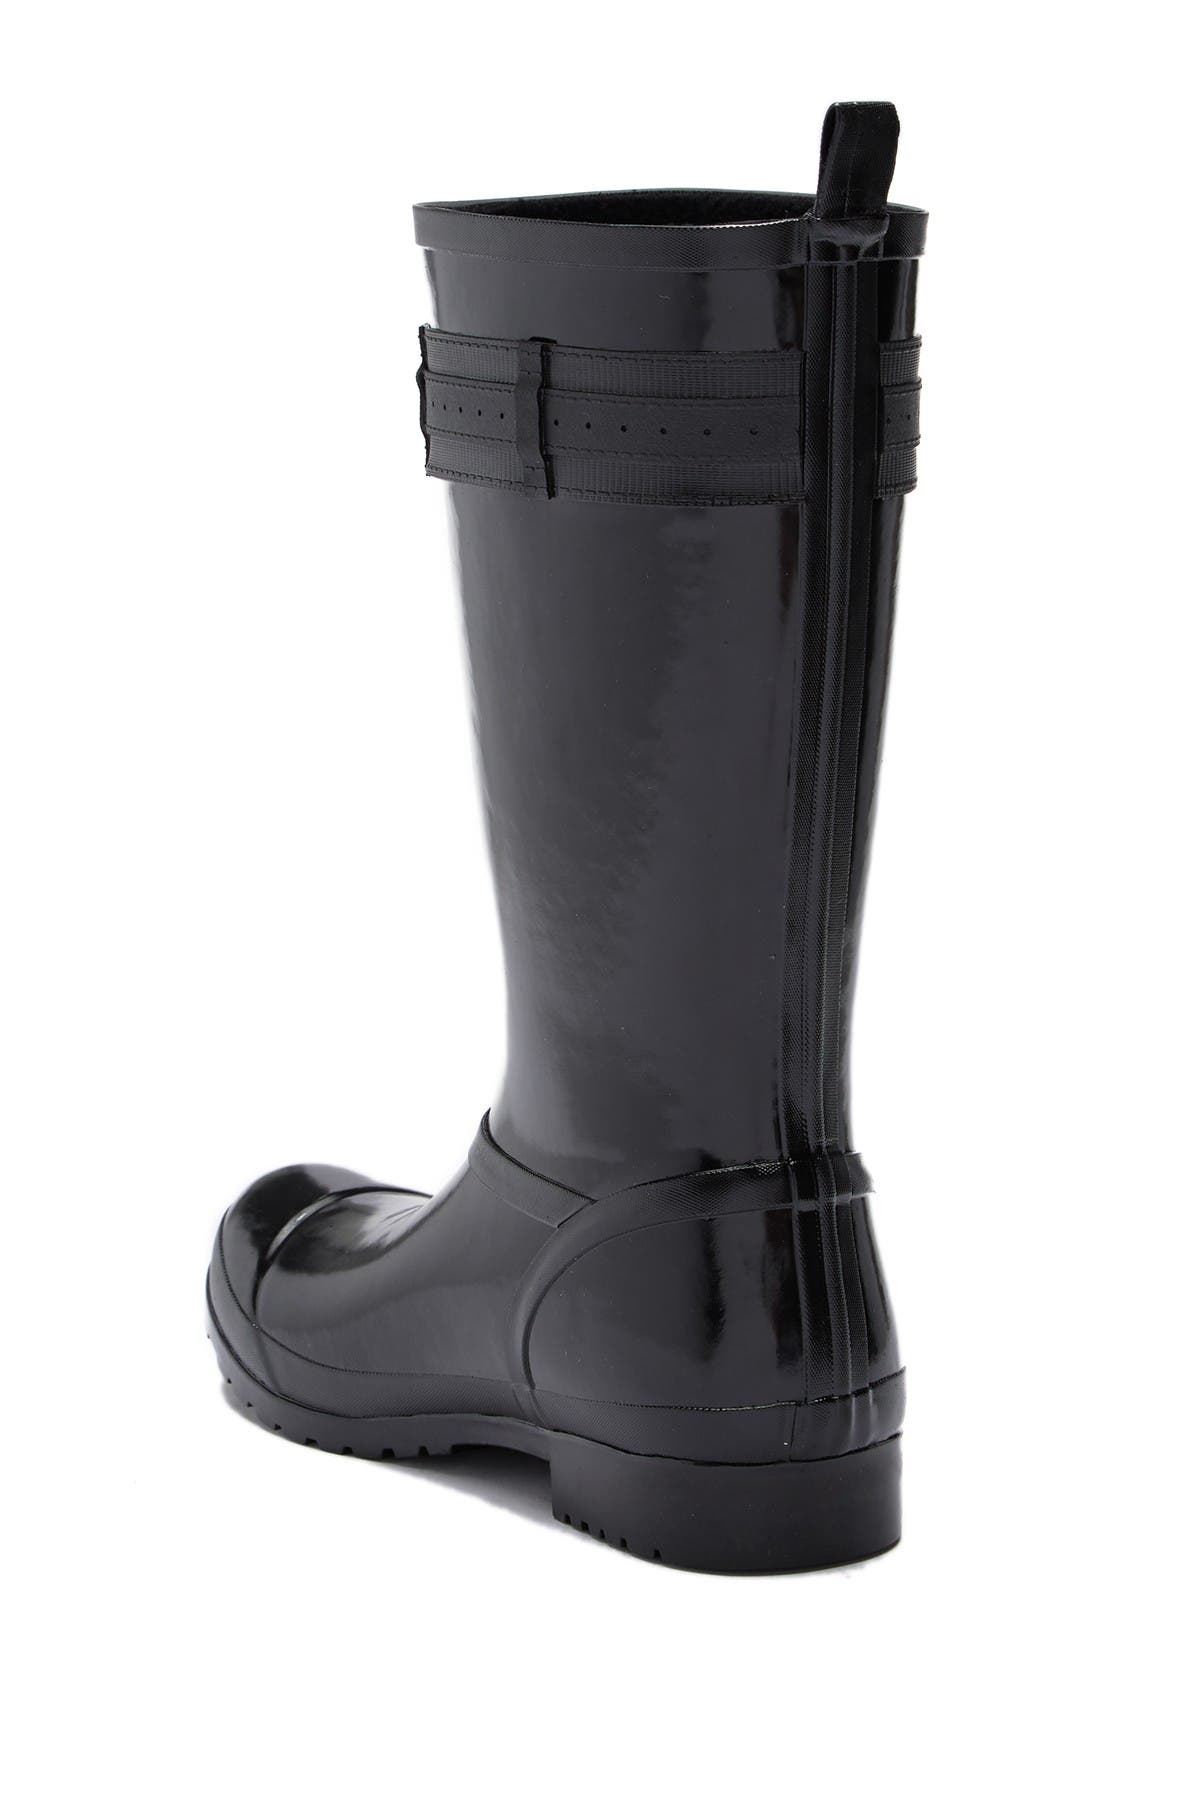 sperry walker atlantic rain boots